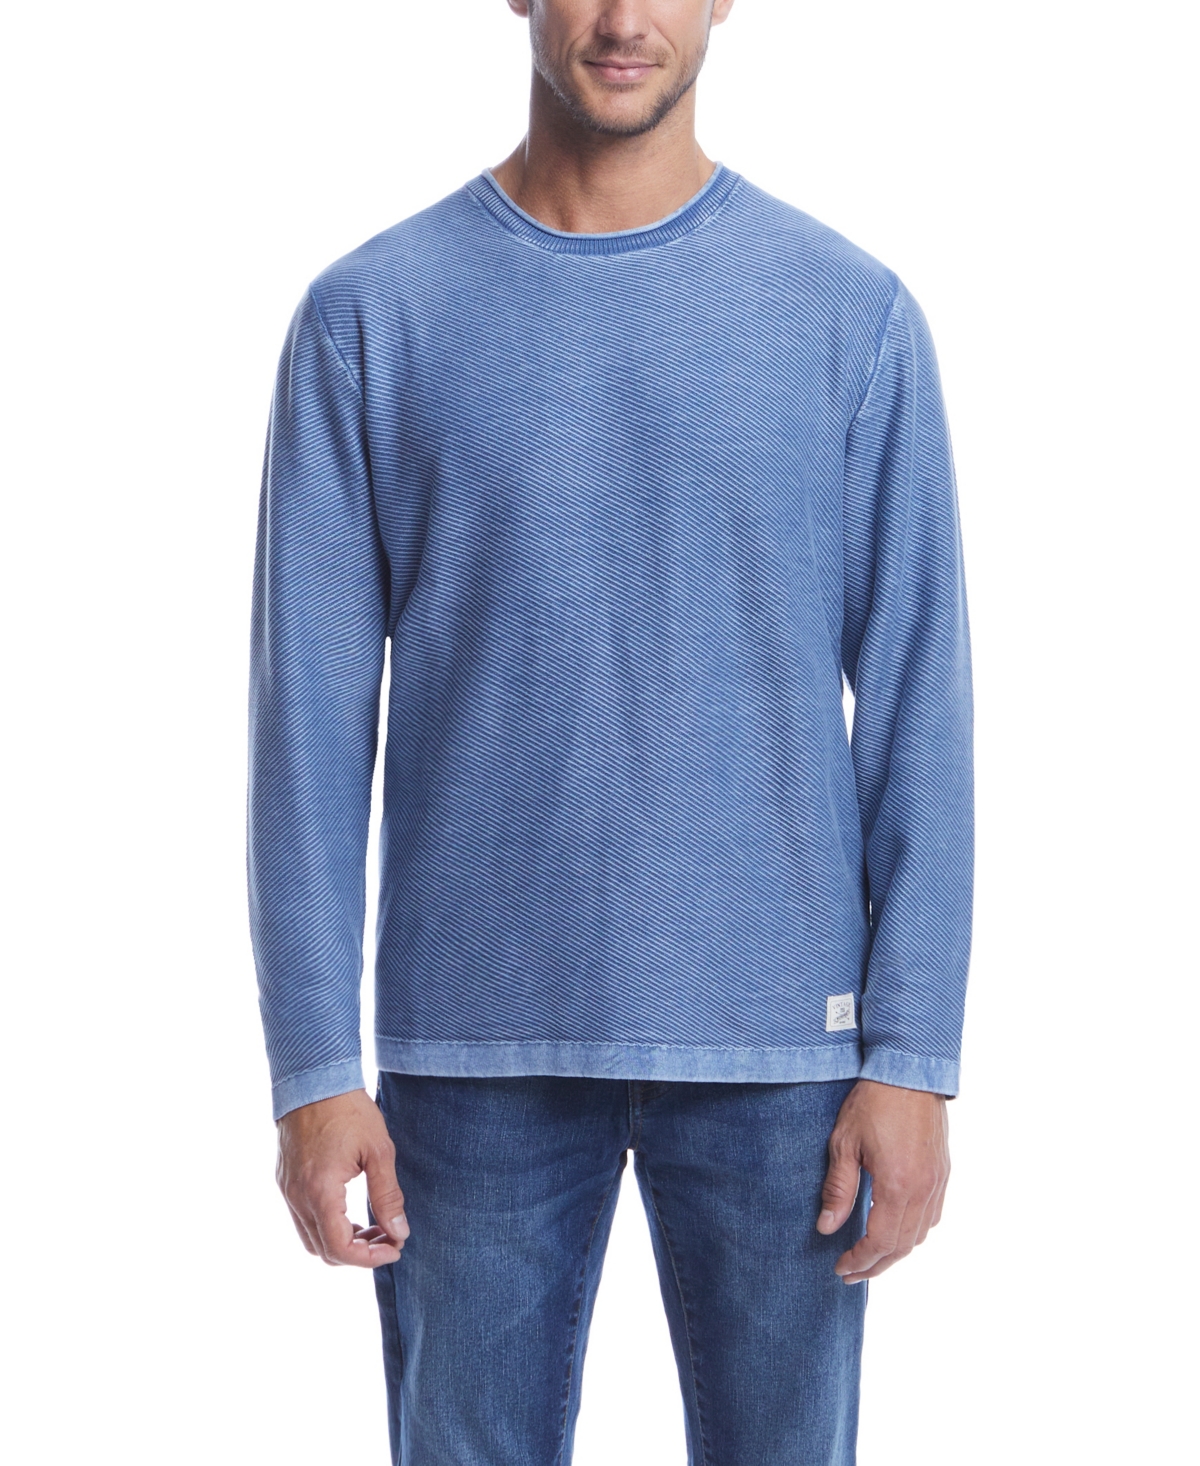 Men's Twill Stonewash Crewneck Sweater - Natural